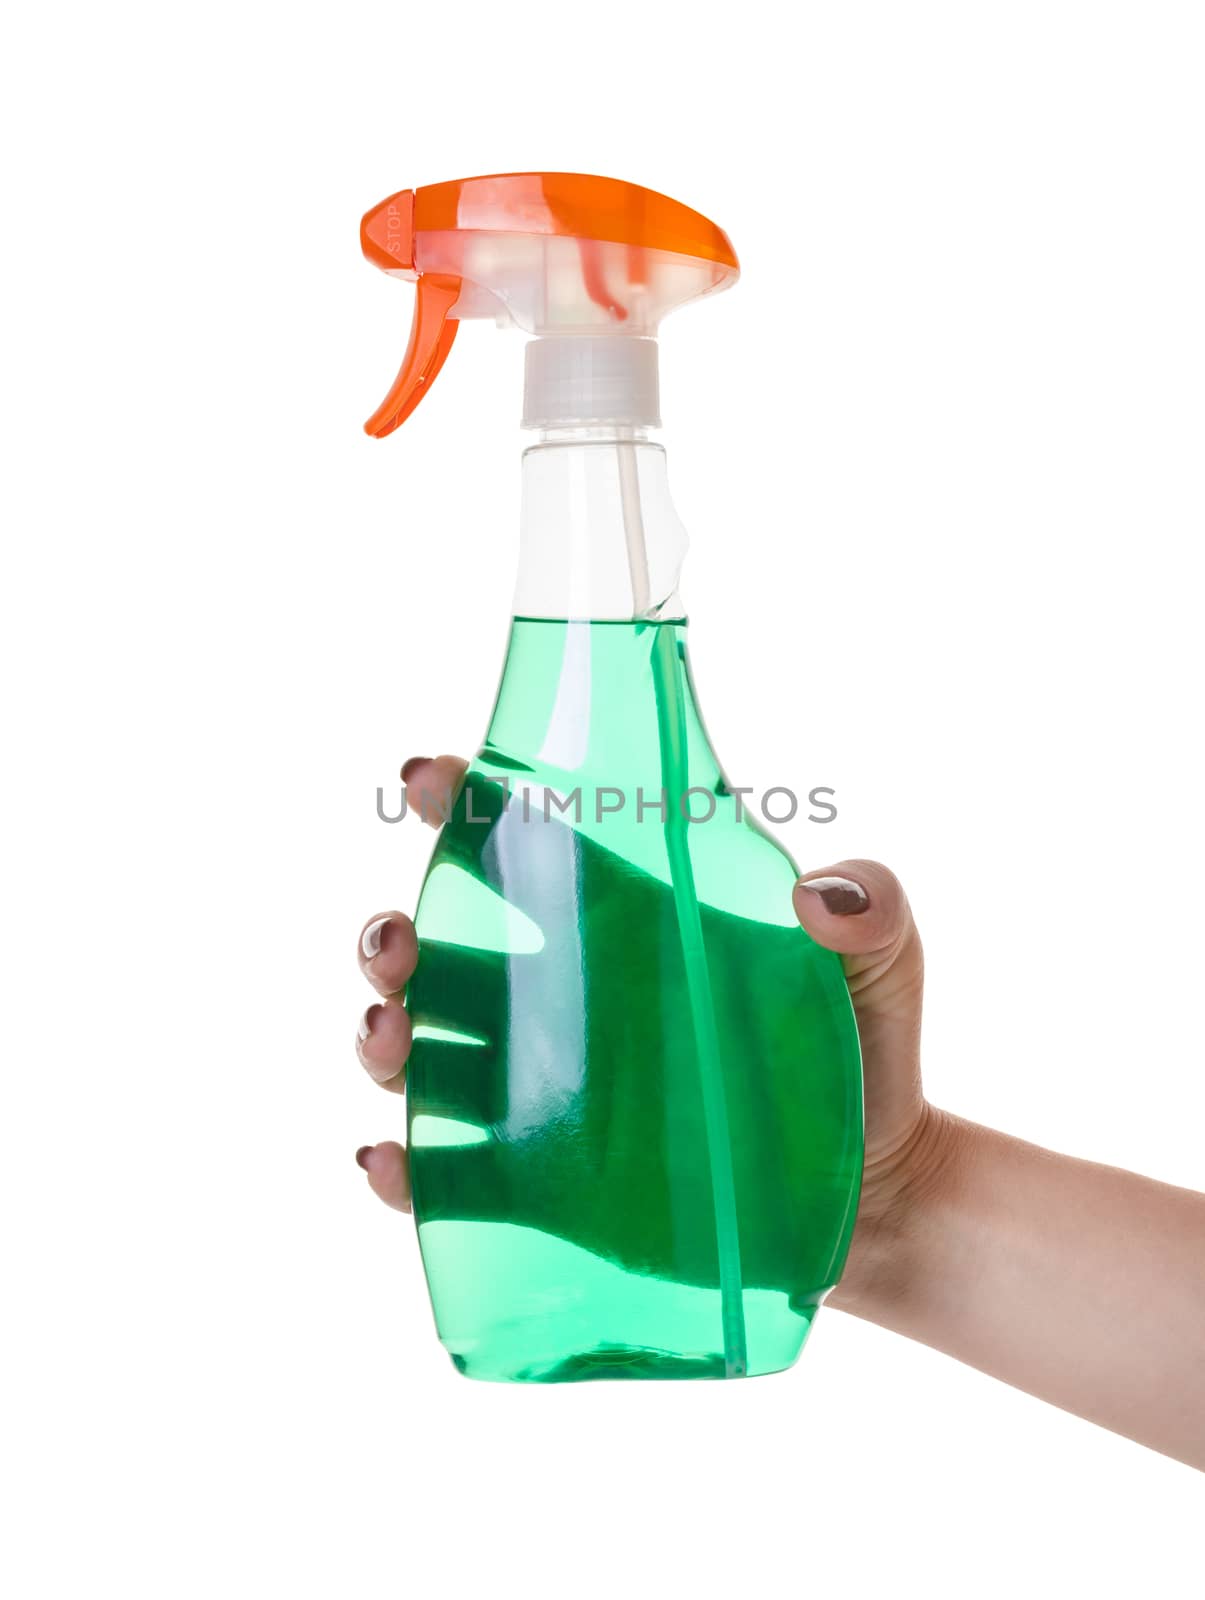 detergent with sprayer in hand  by MegaArt